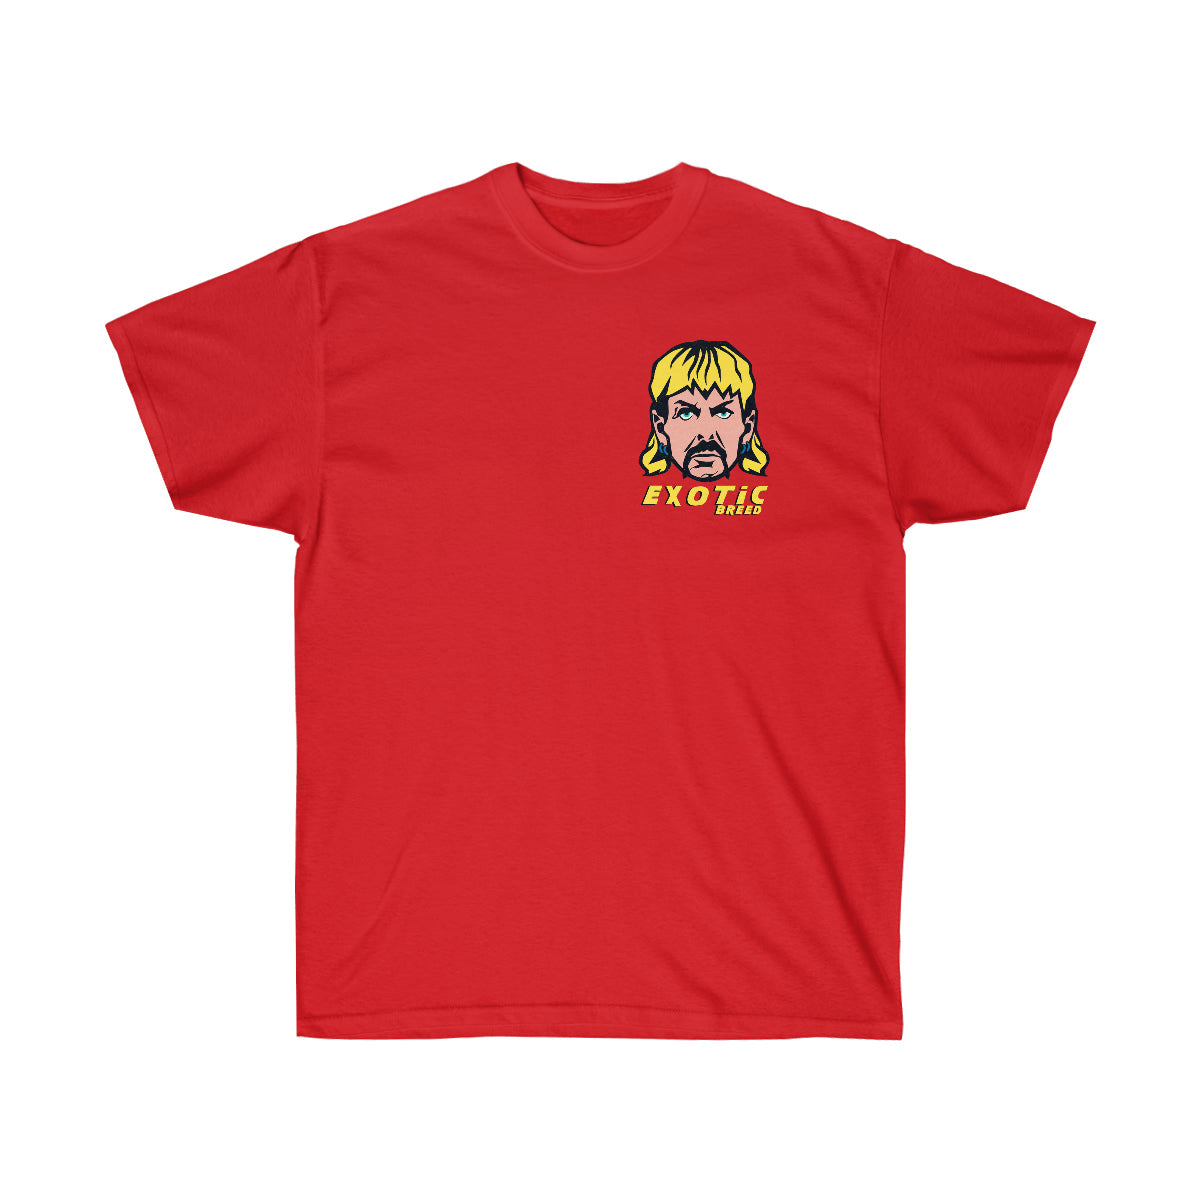 Exotic Breed | Joe Exotic Meme Comfort Fit T-Shirt